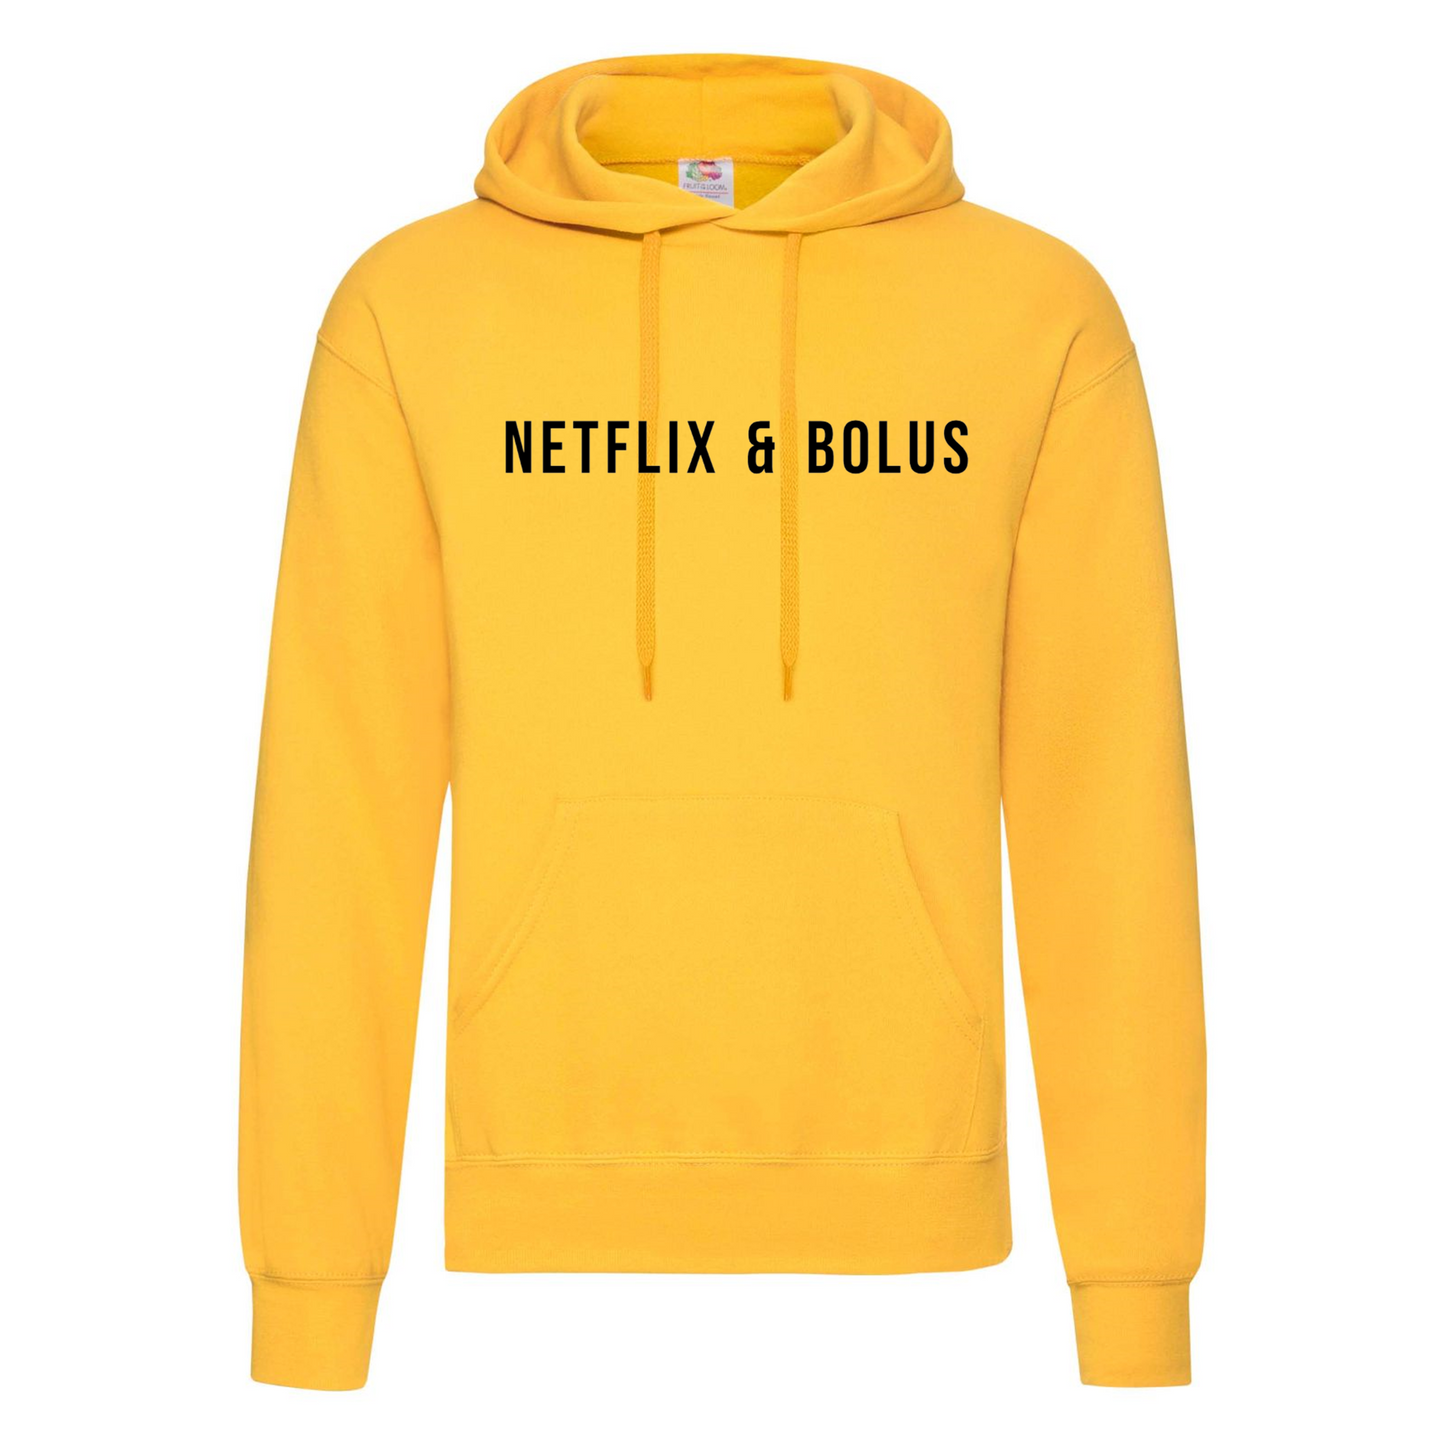 Netflix & Bolus Kids Hoodie